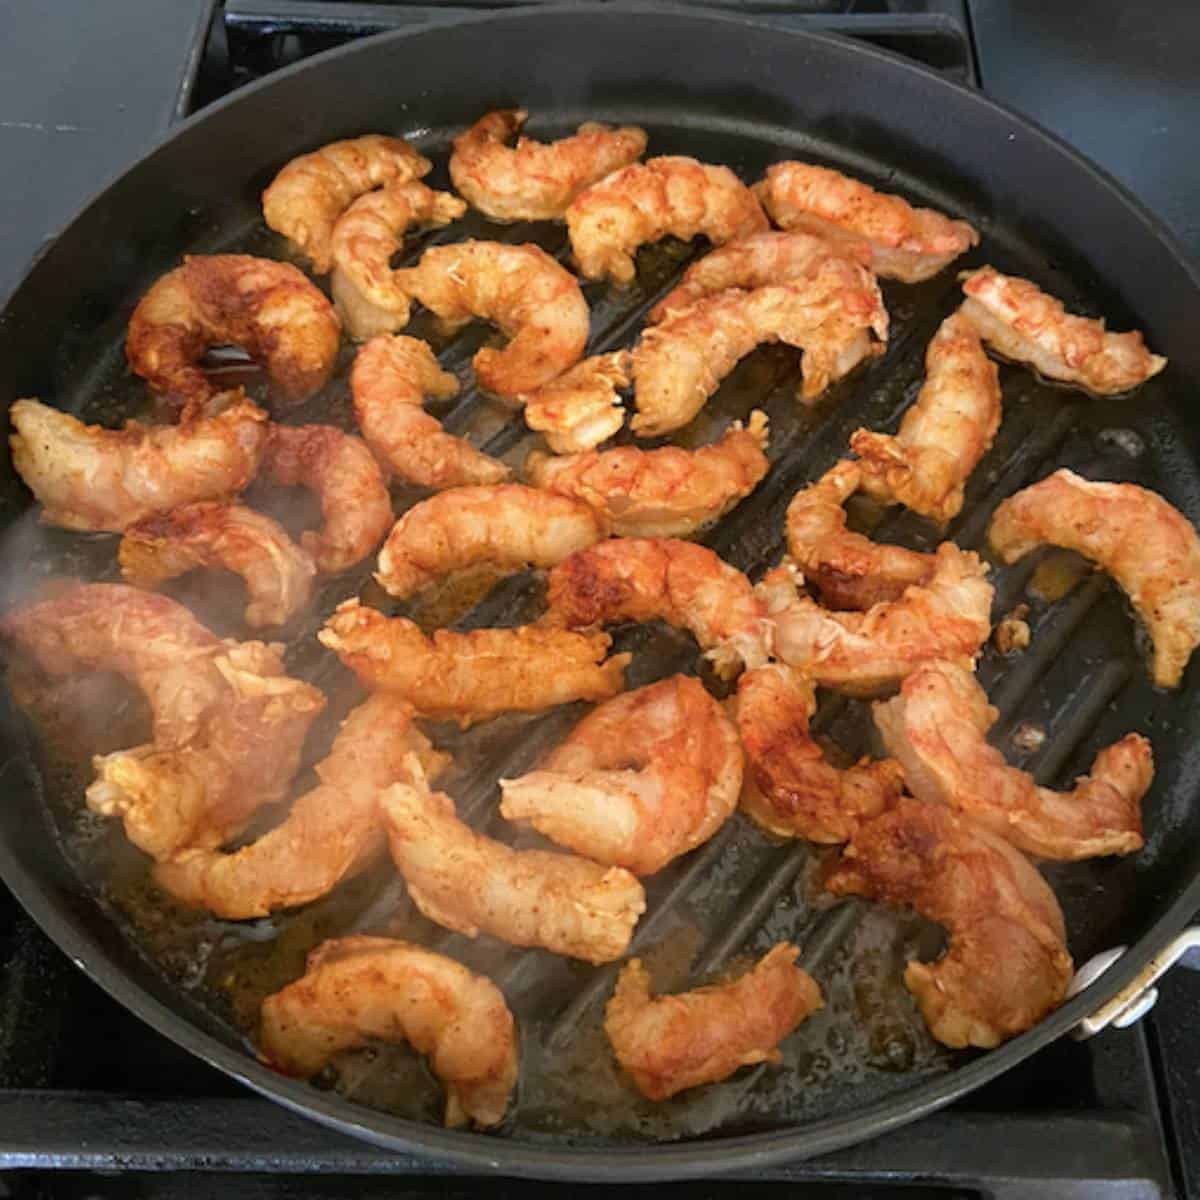 Shrimp pan frying on grill pan.